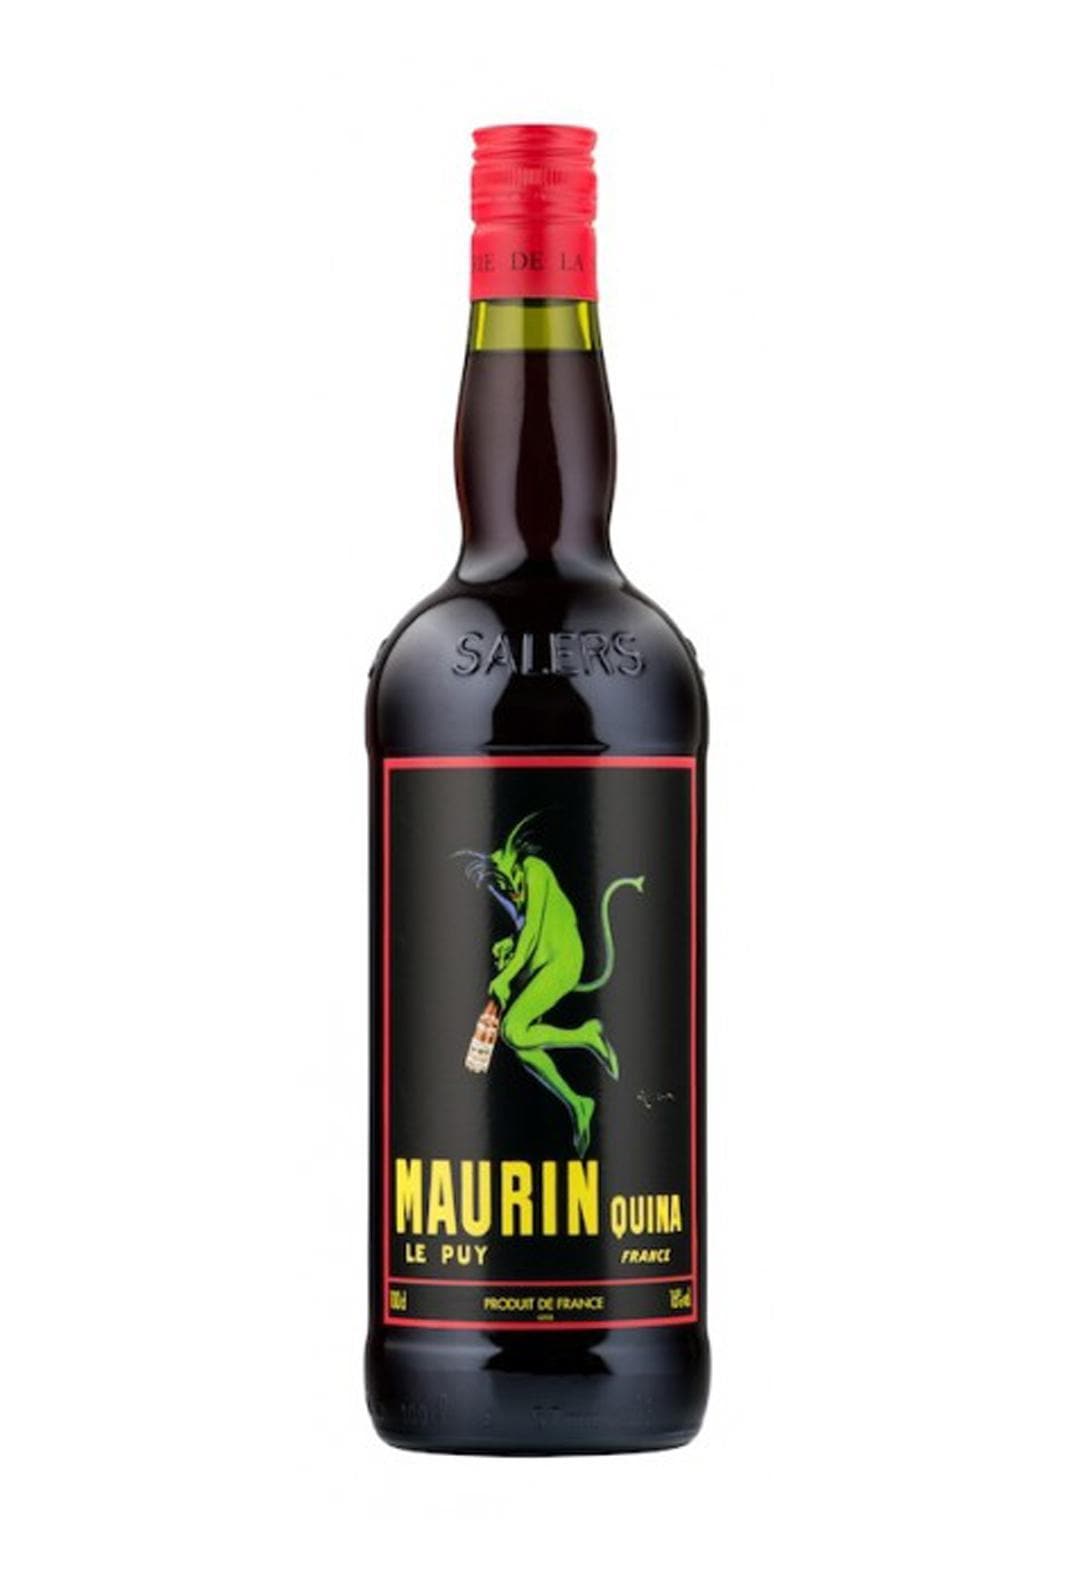 Maurin Quina Le Puy Aperitif 16% 1000ml | Liquor & Spirits | Shop online at Spirits of France